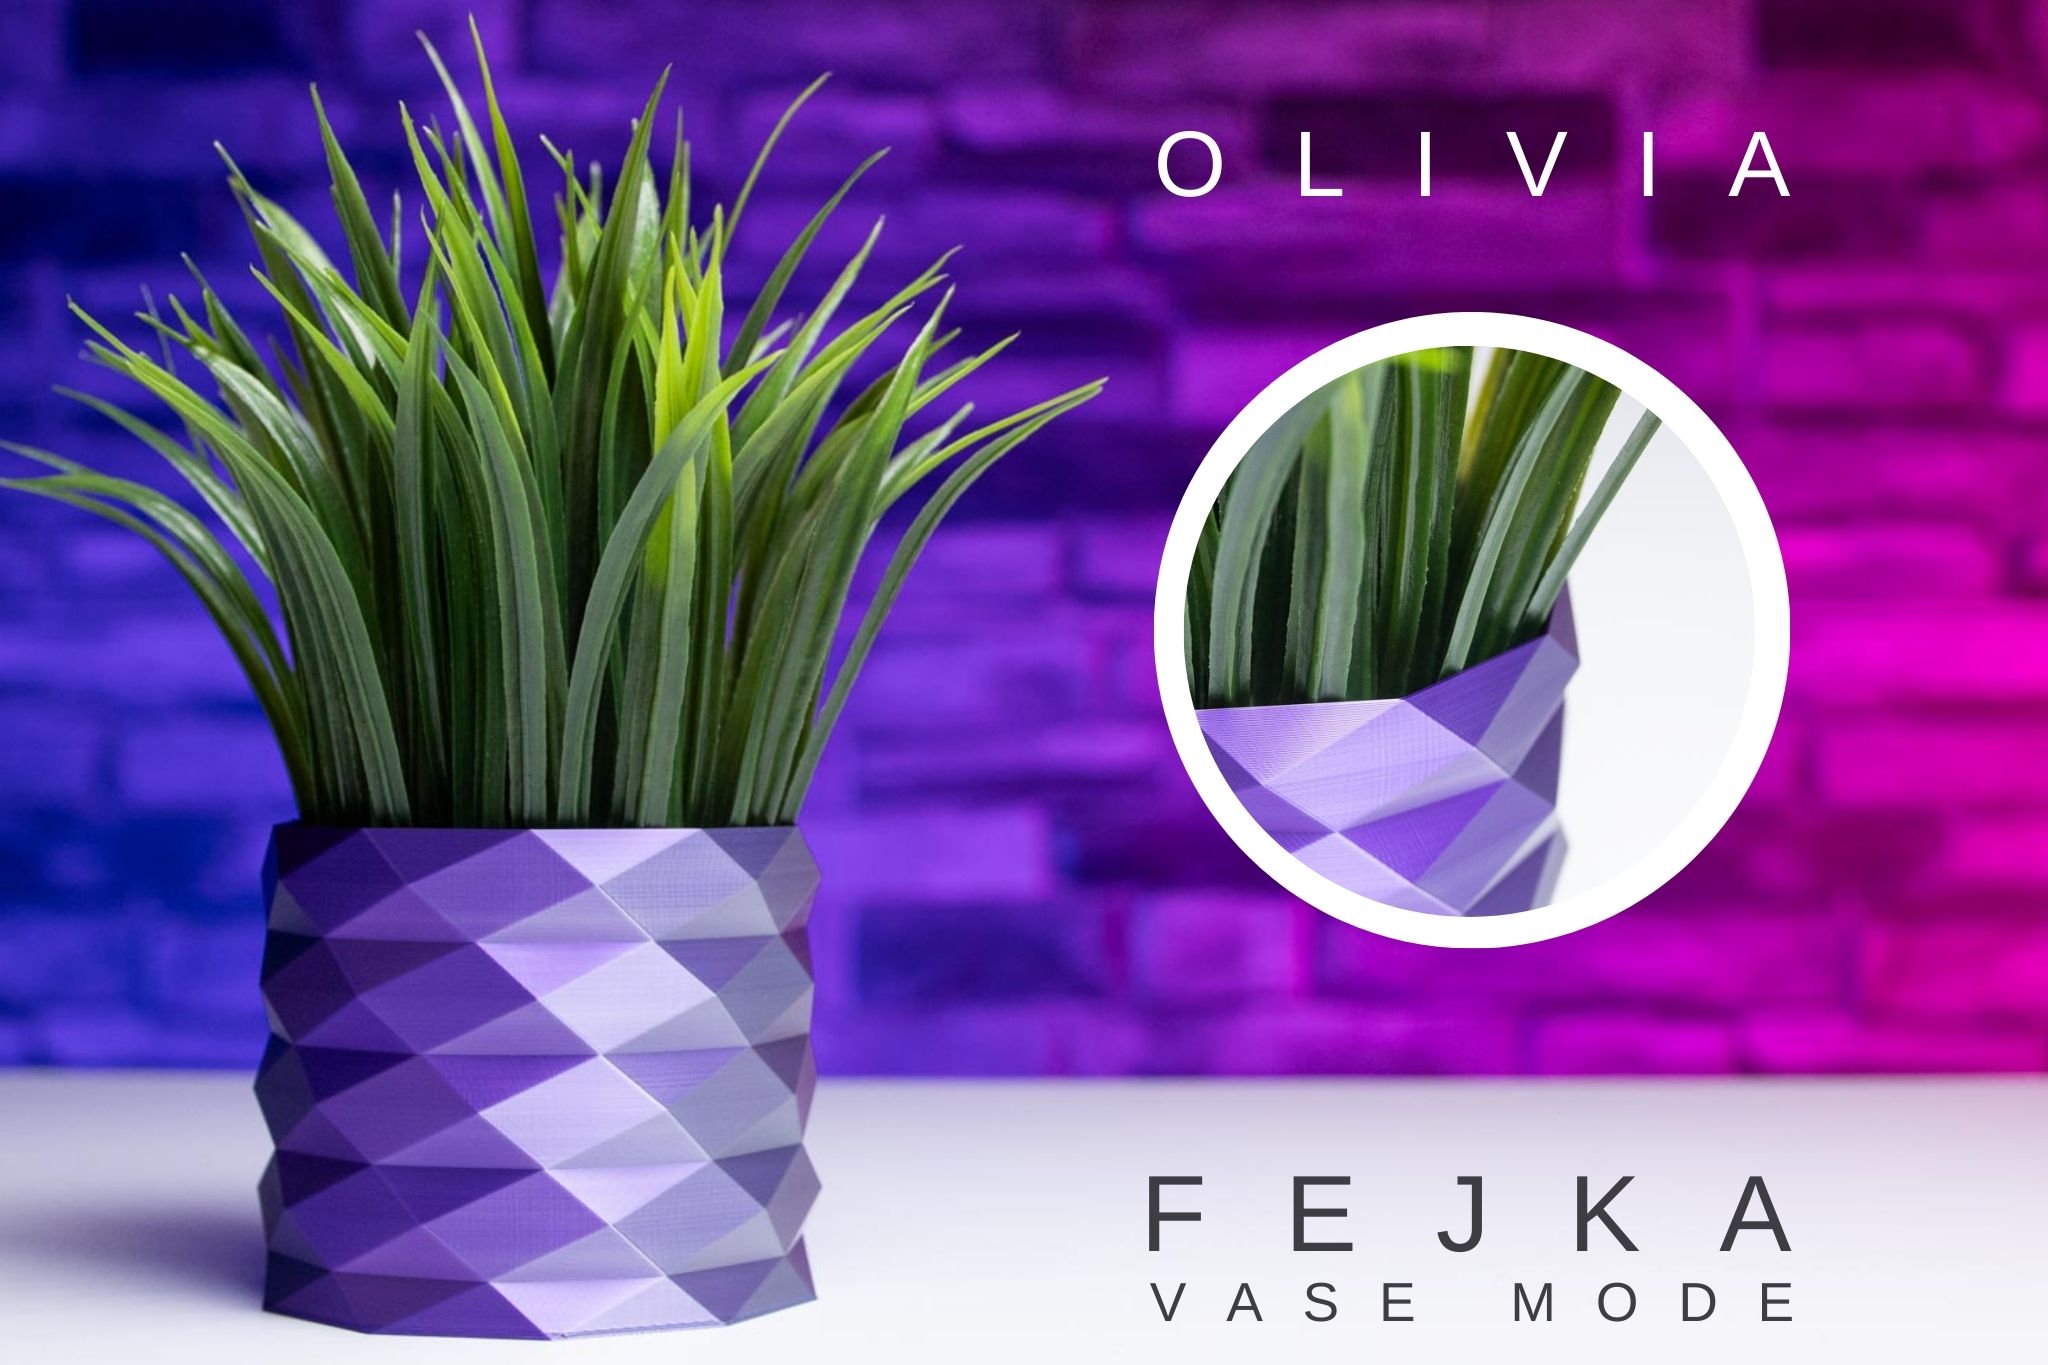 3D Printed Planter and Pot for Ikea Fejka - Vase OLIVIA